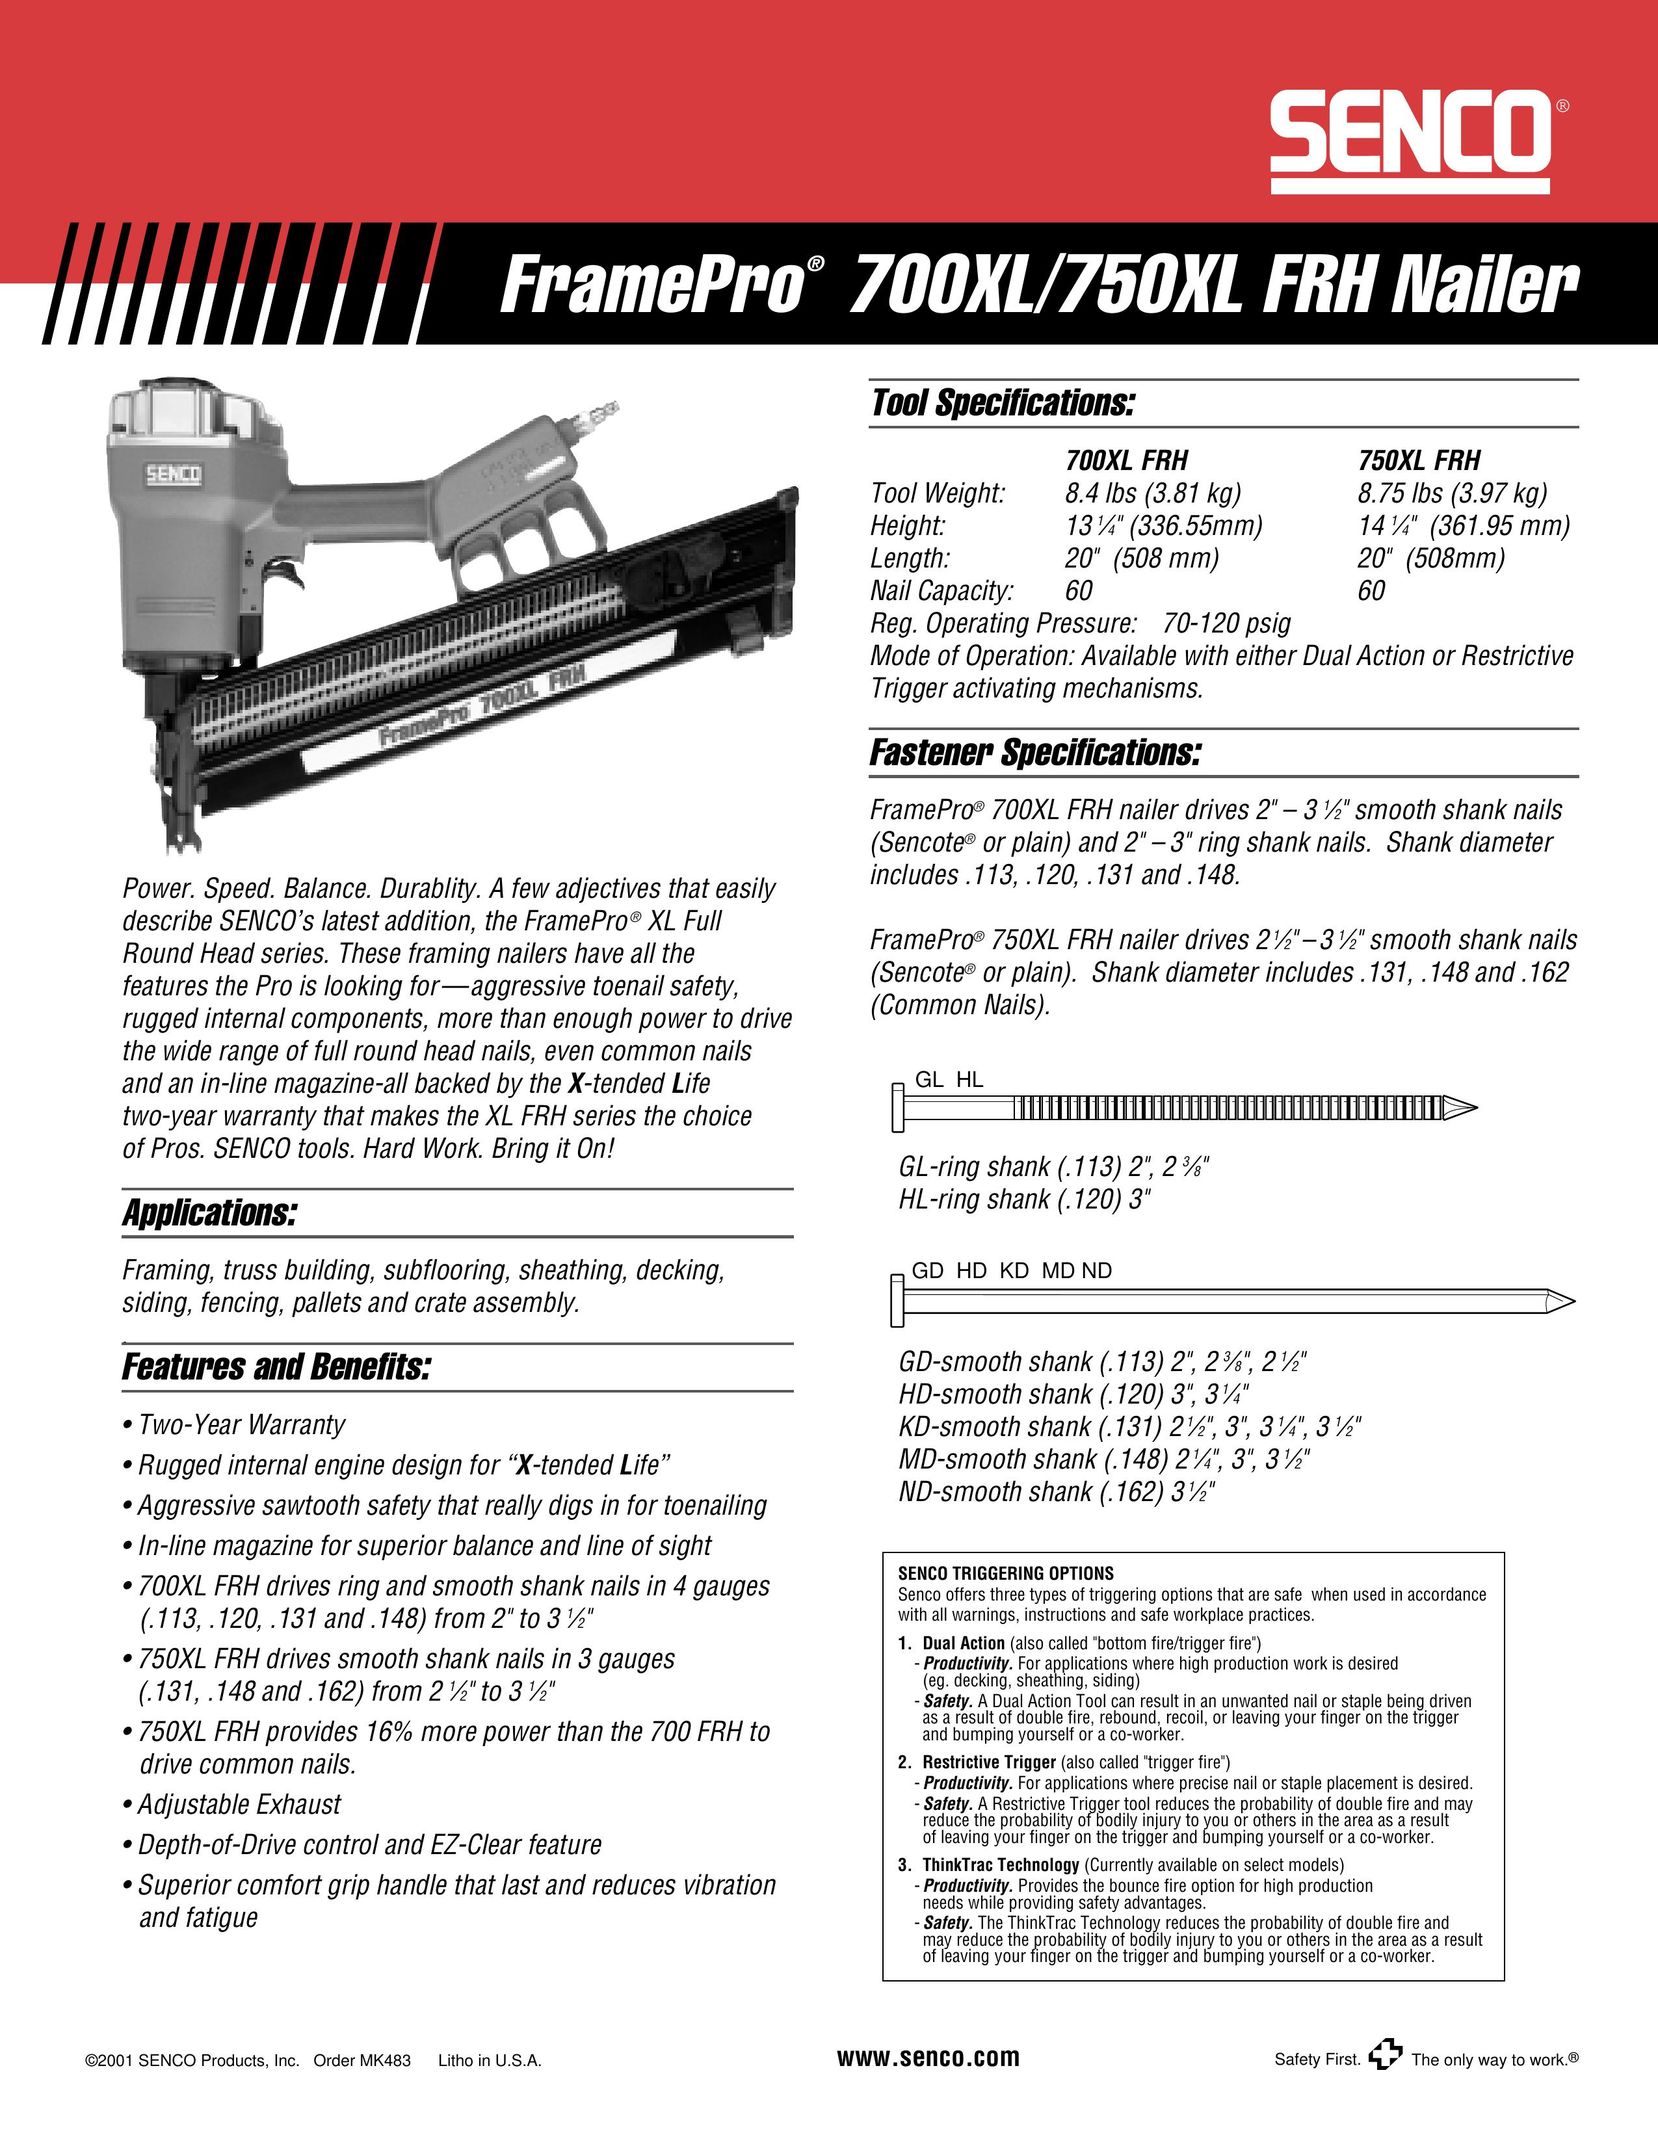 Senco 750XL Nail Gun User Manual